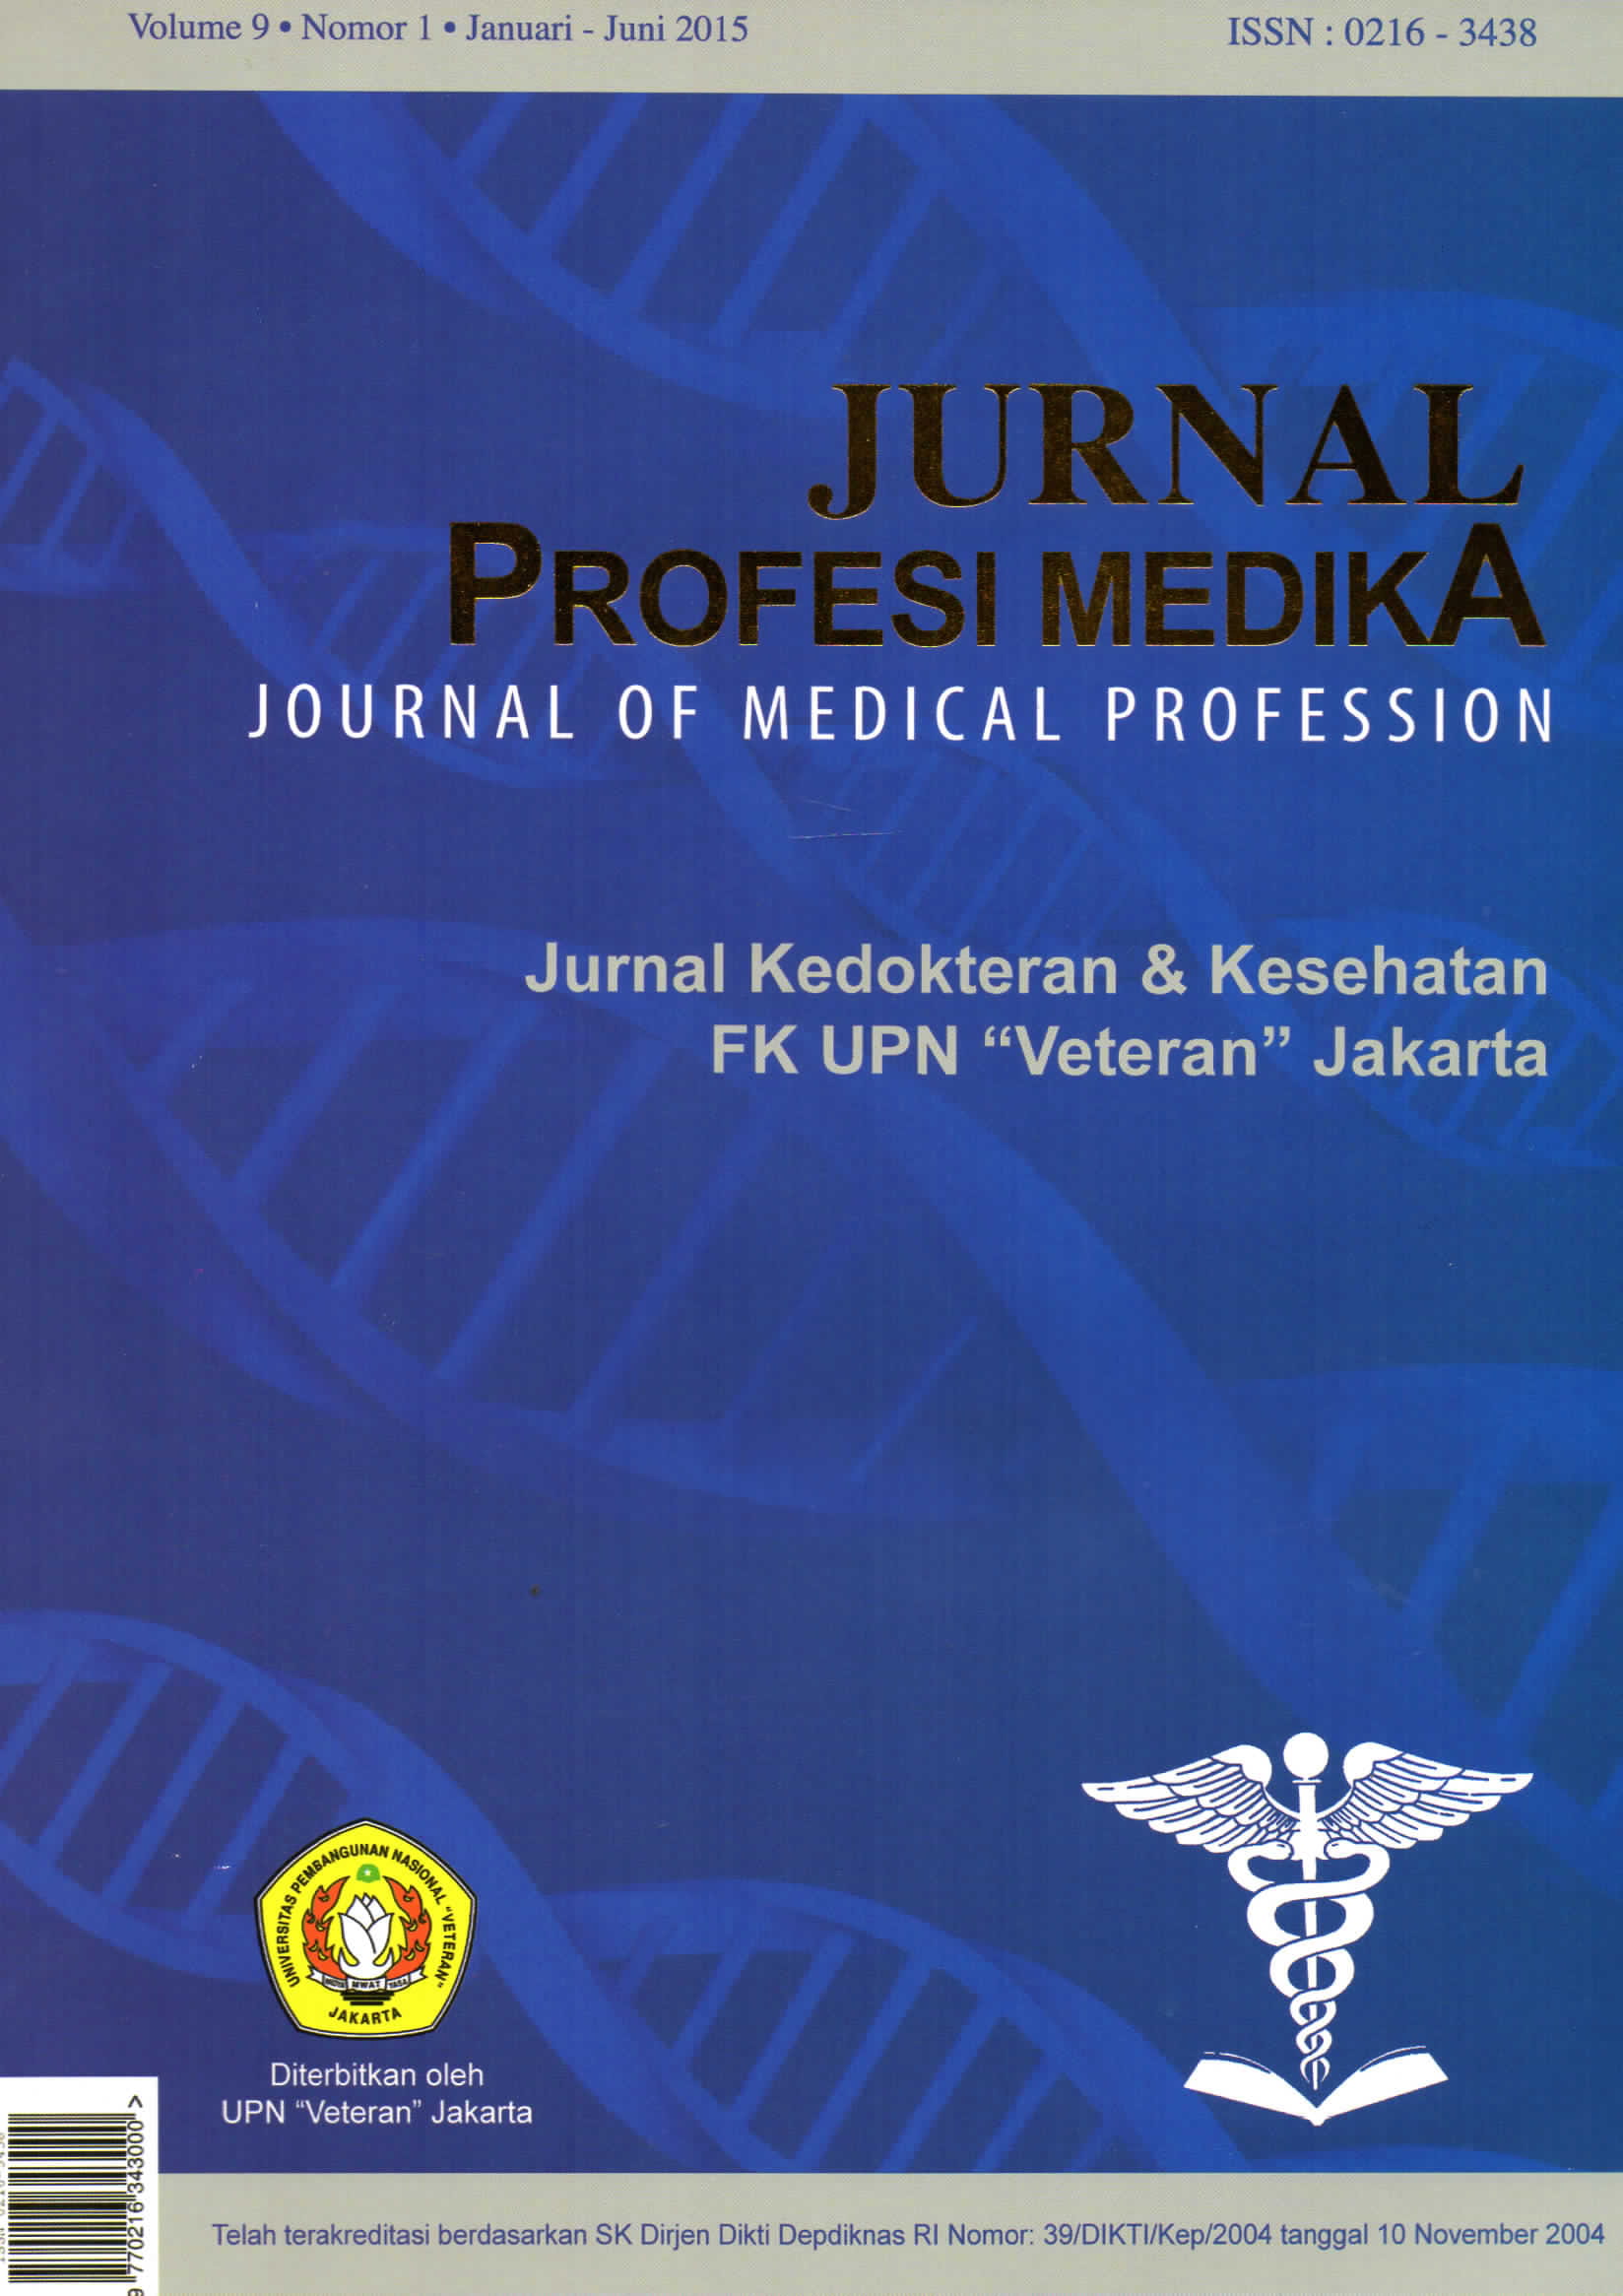 					View Vol. 9 No. 1 (2015): Jurnal Profesi Medika : Jurnal Kedokteran dan Kesehatan
				